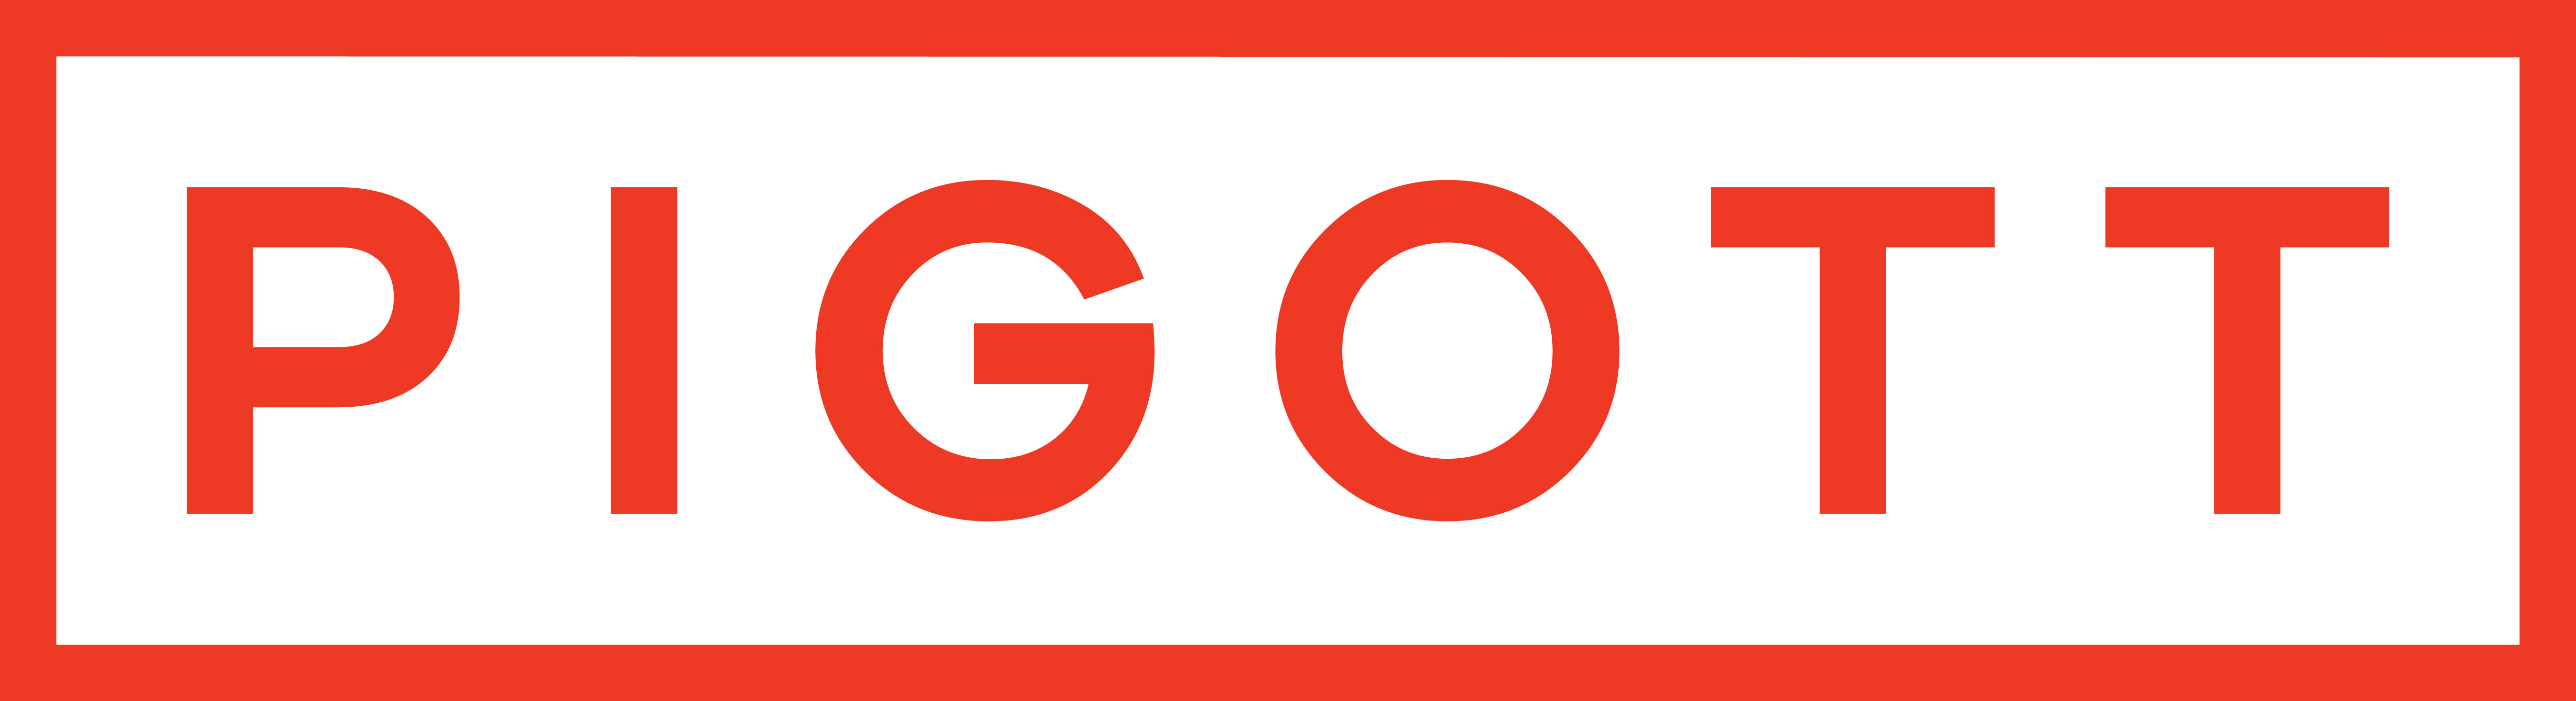 Pigott logo